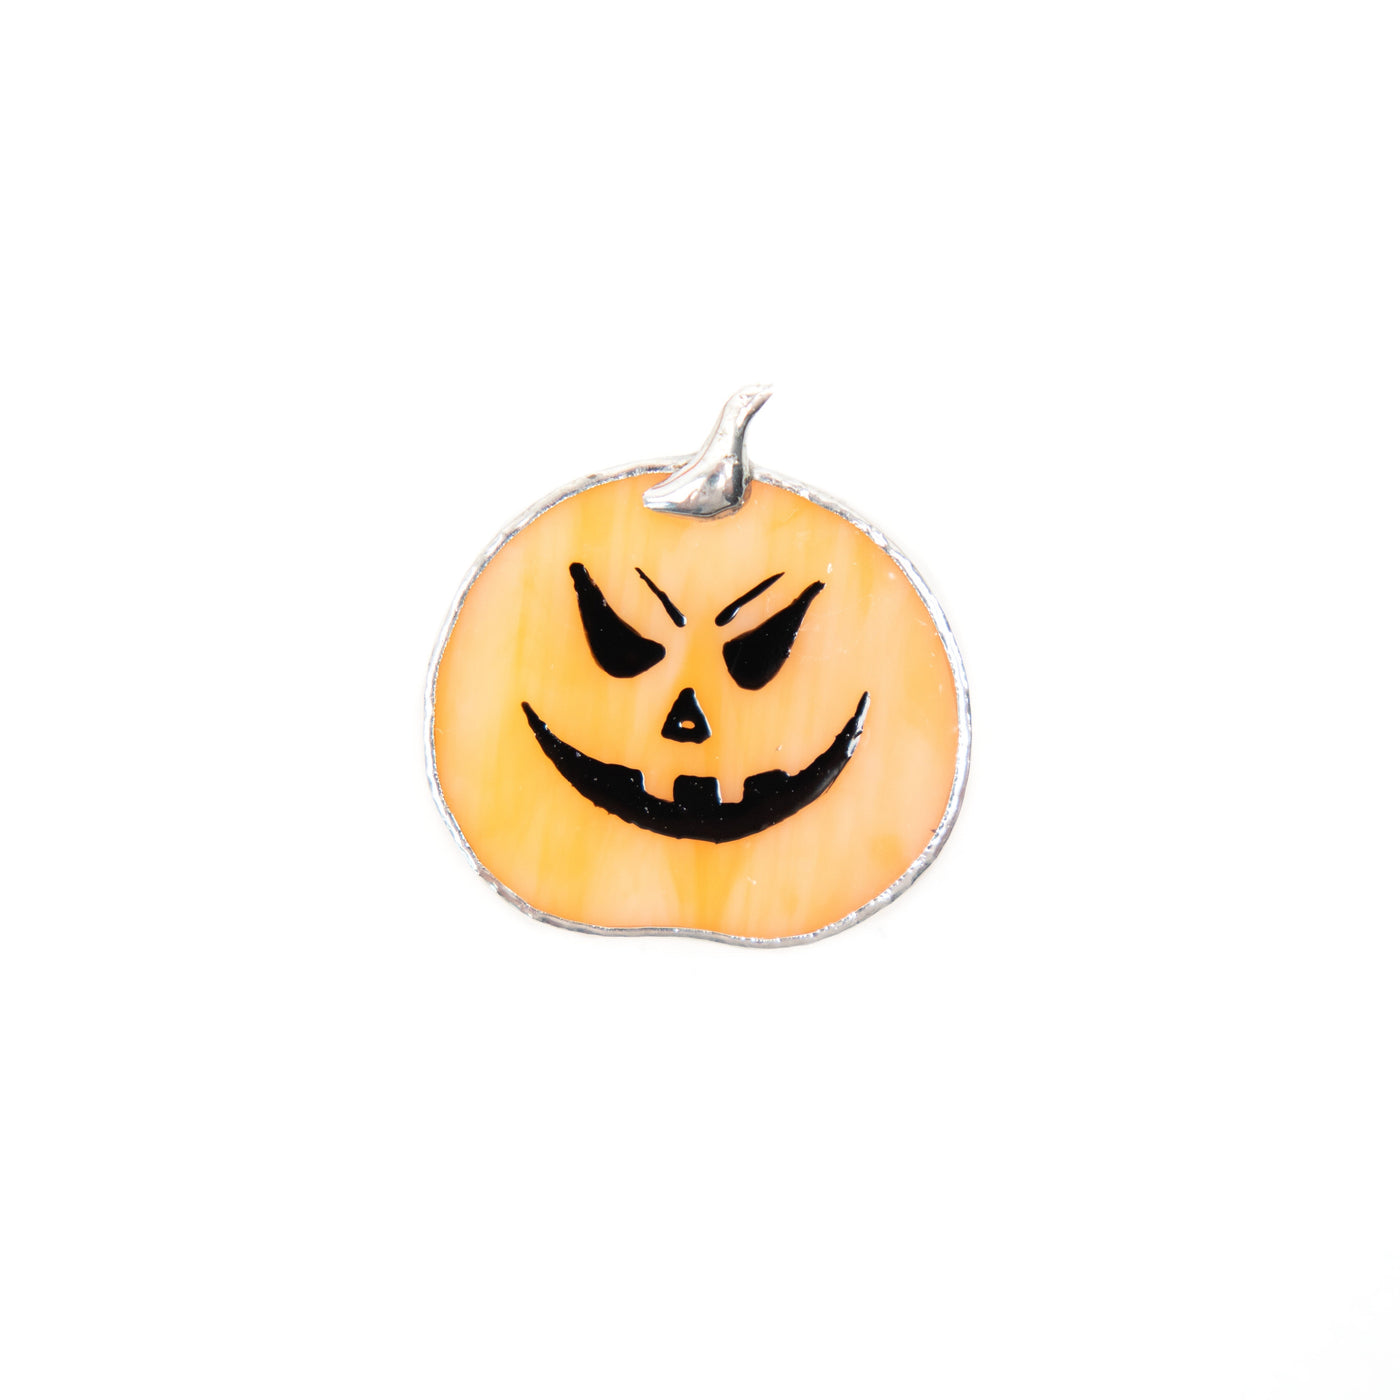 Stained glass pale-orange Halloween pumpkin brooch 